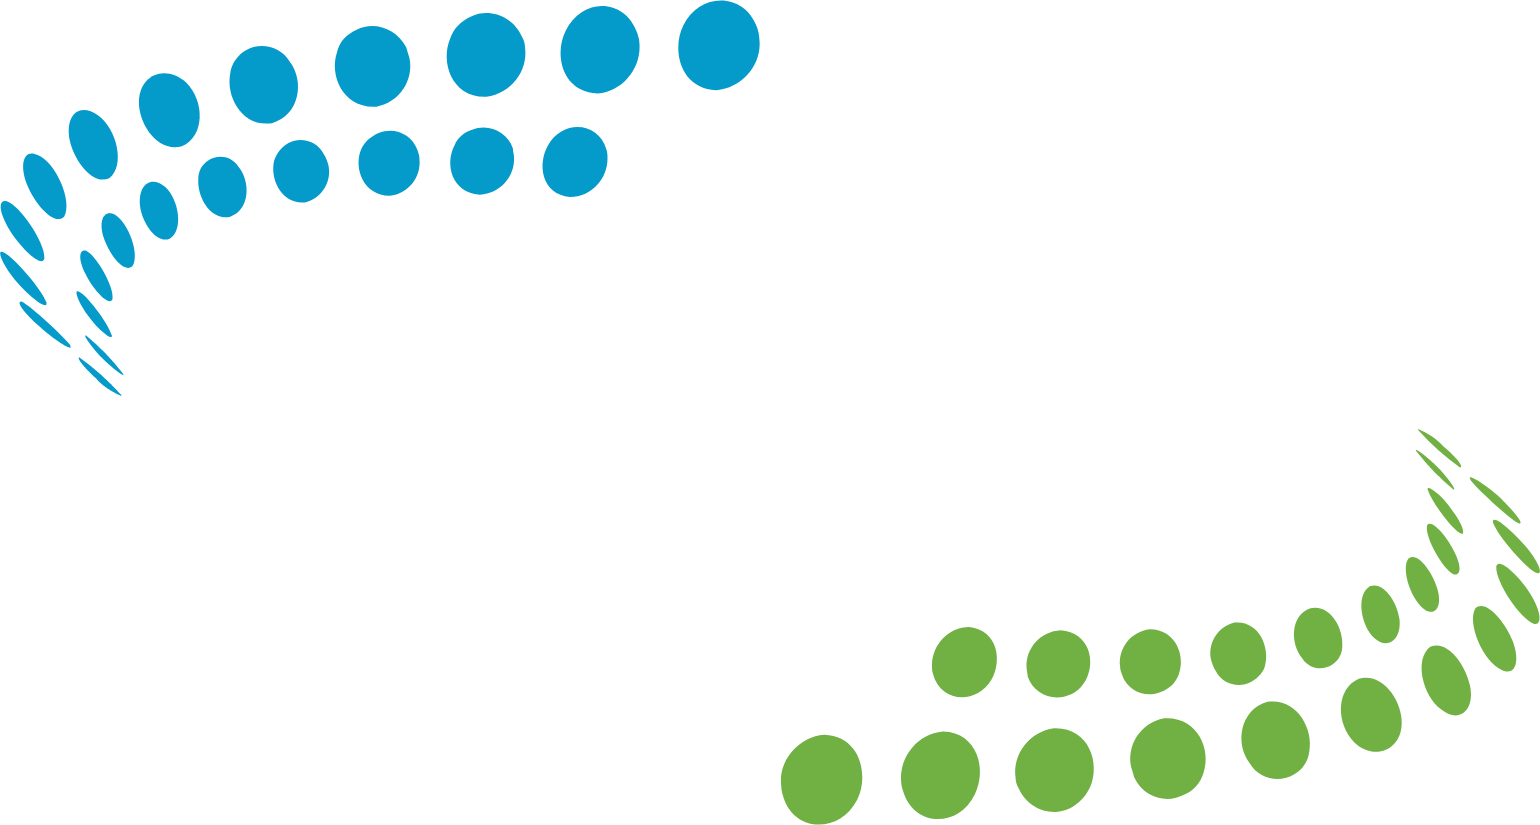 Aurora Energy Metals logo large for dark backgrounds (transparent PNG)